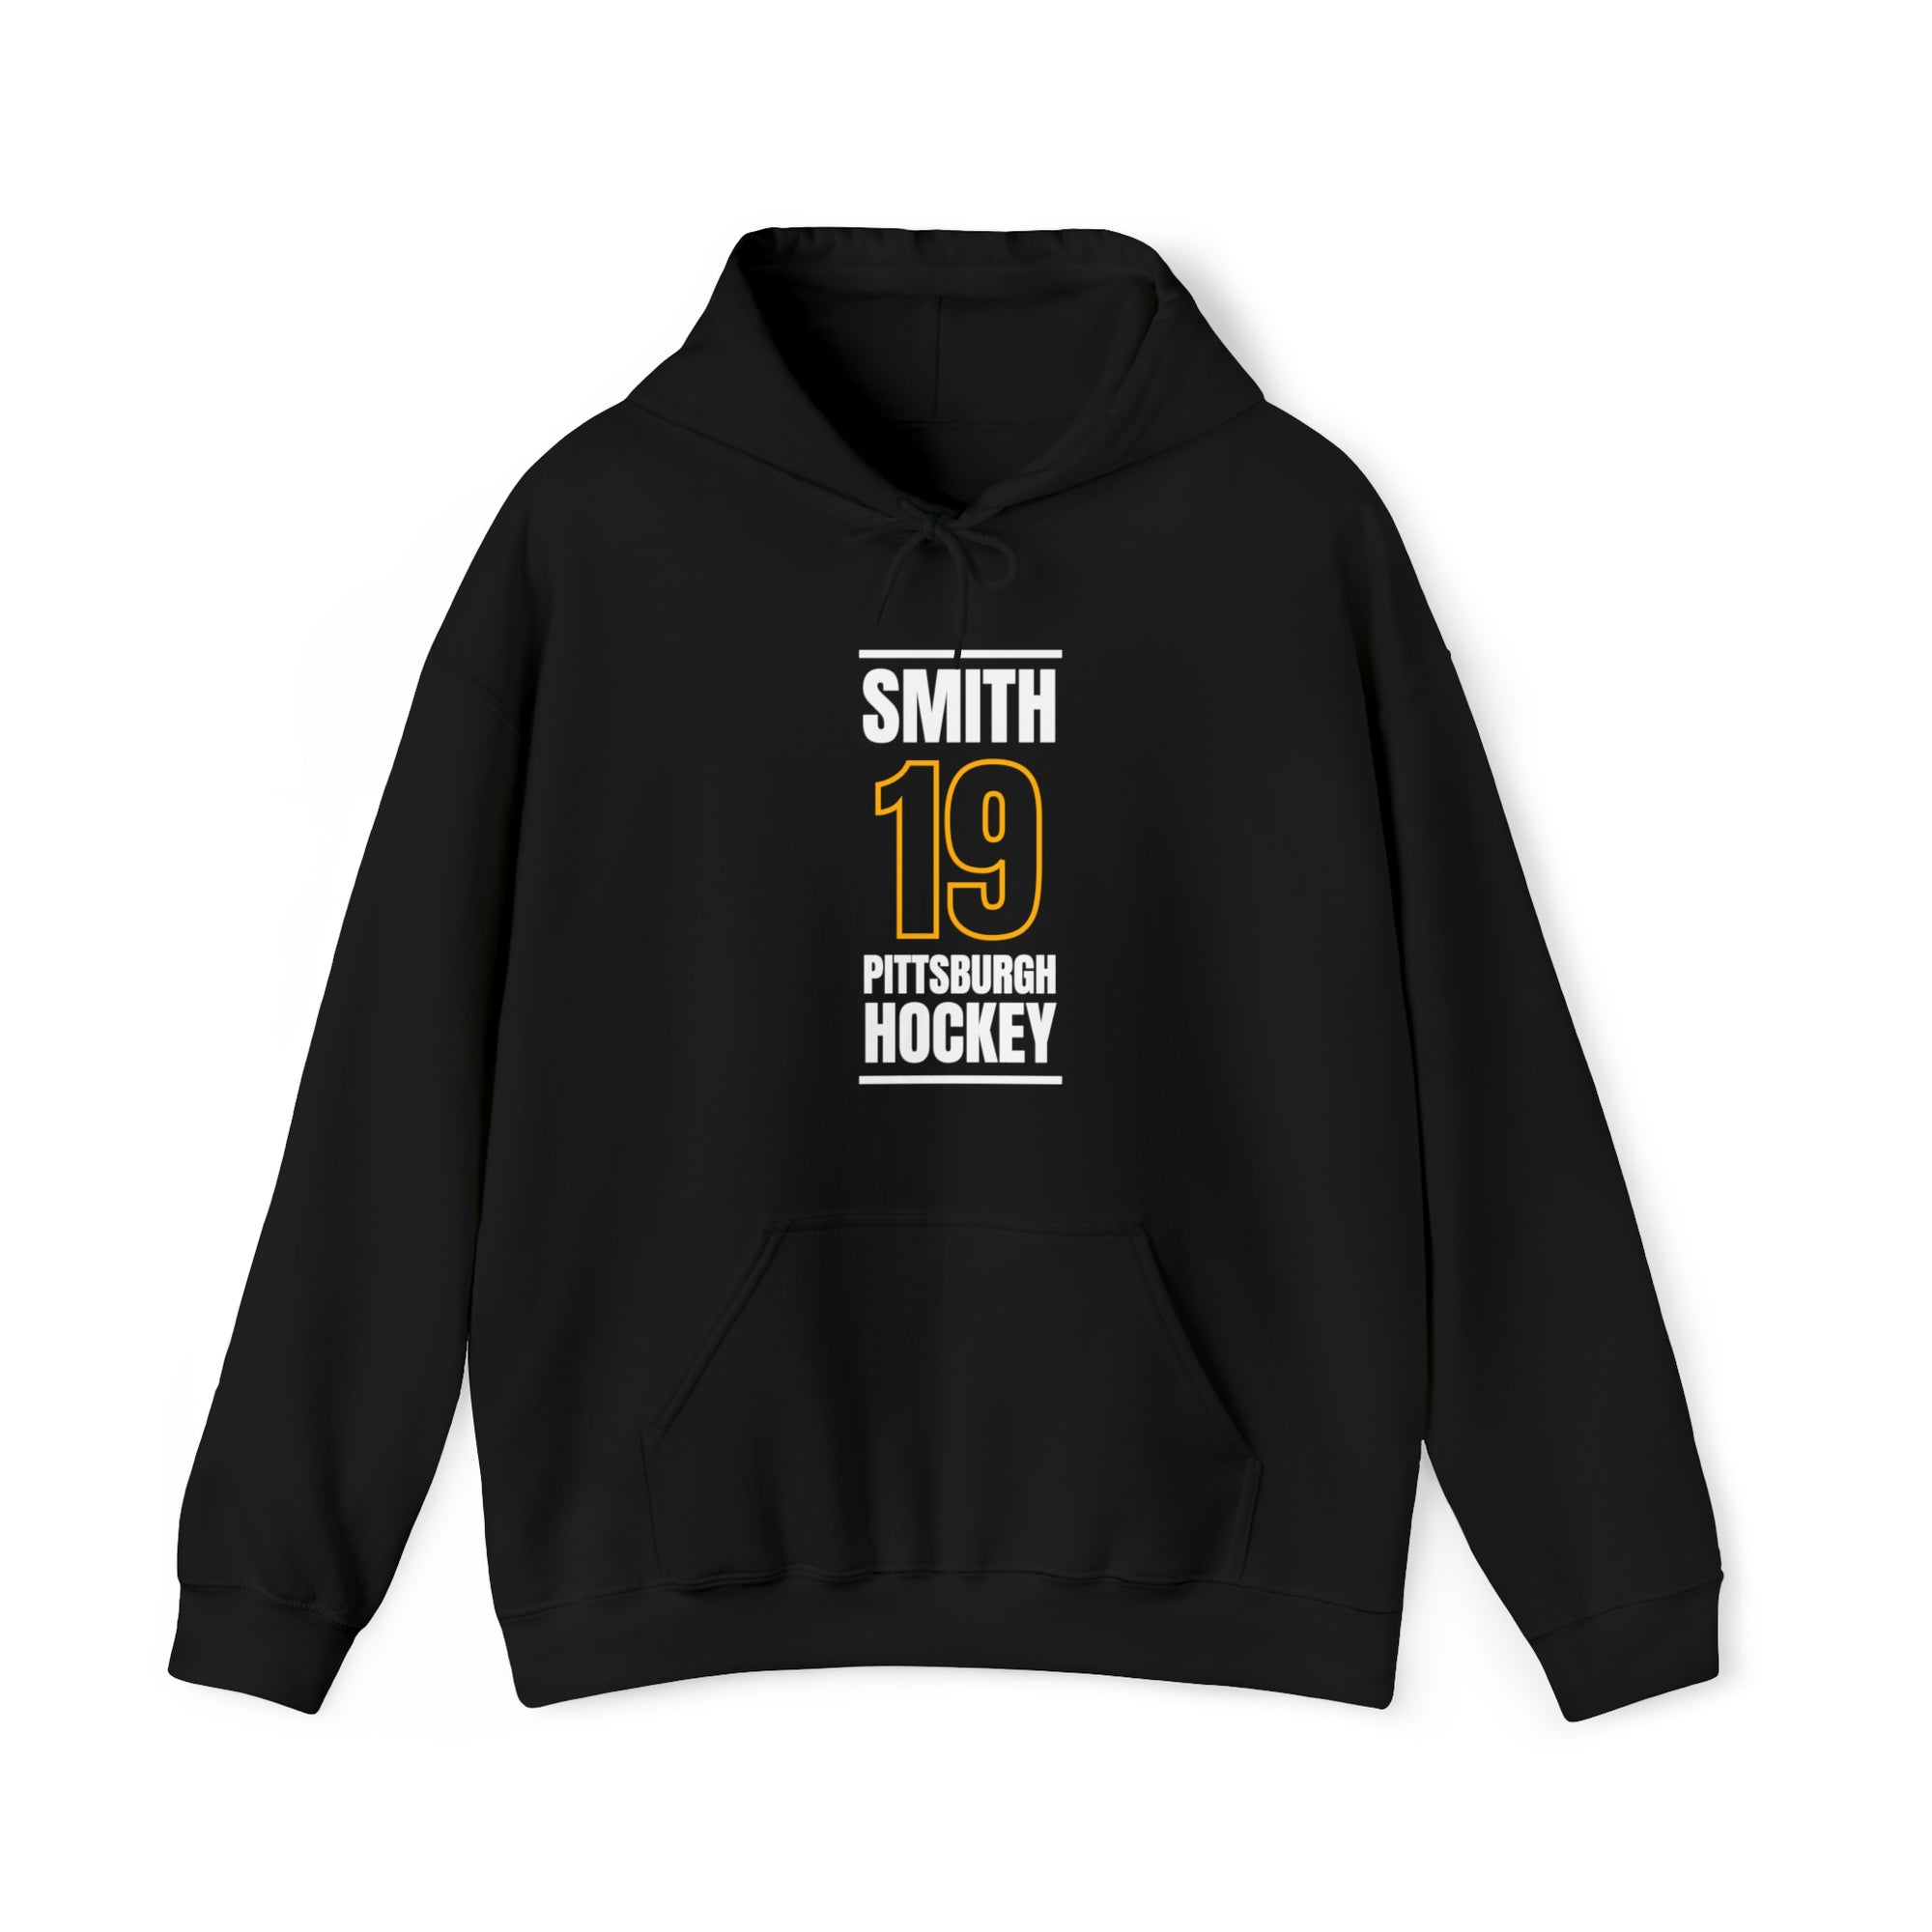 Smith 19 Pittsburgh Hockey Black Vertical Design Unisex Hooded Sweatshirt